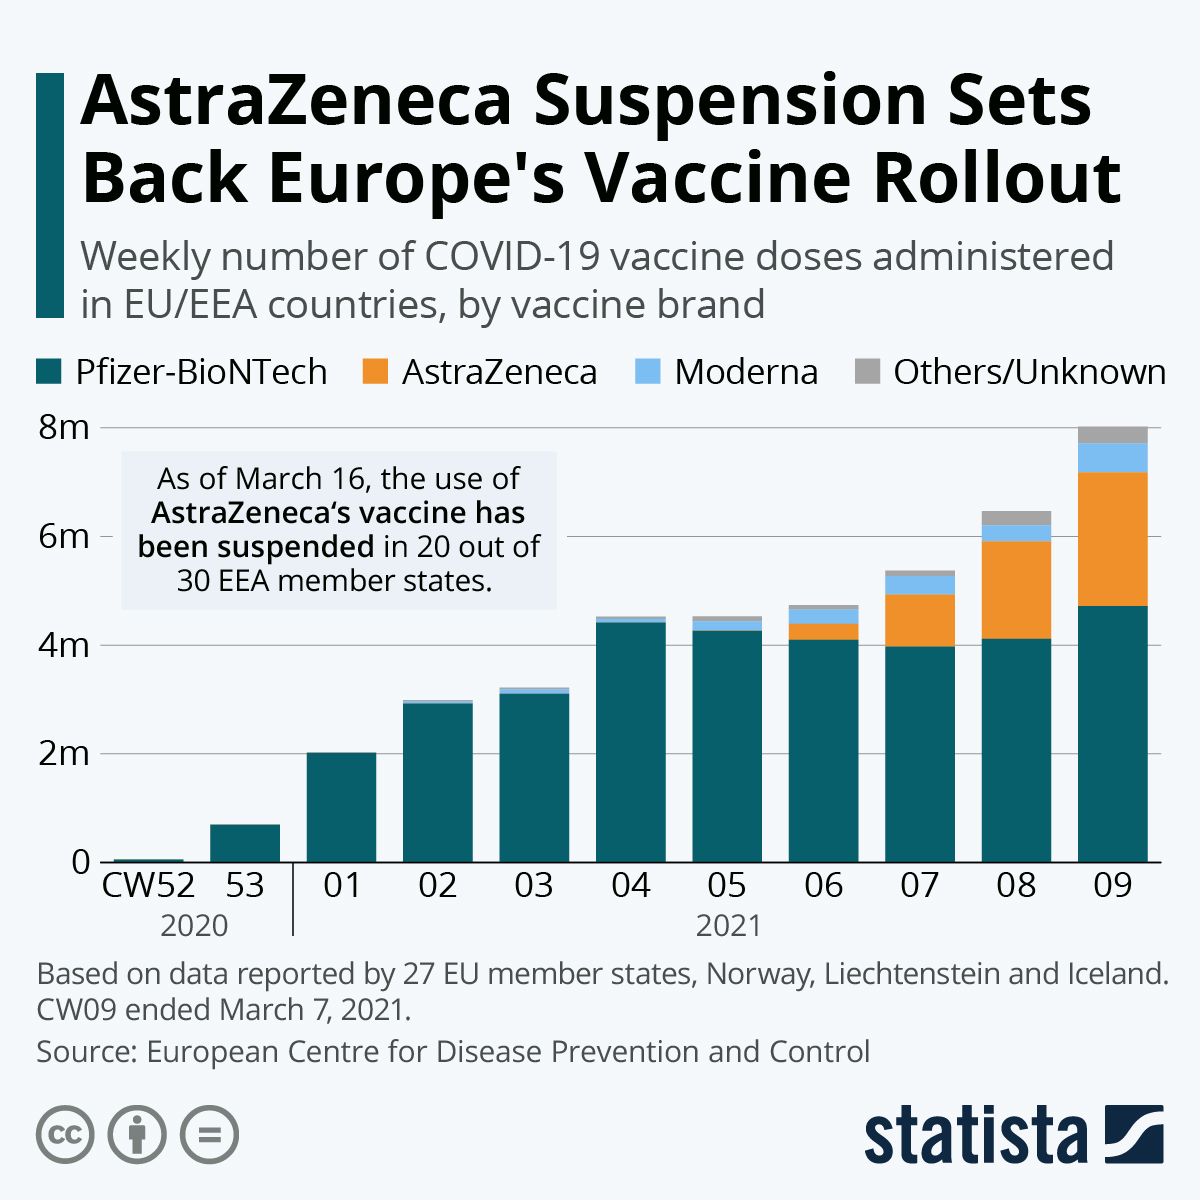 AstraZeneca Suspension Sets Back Europe's Vaccine Rollout